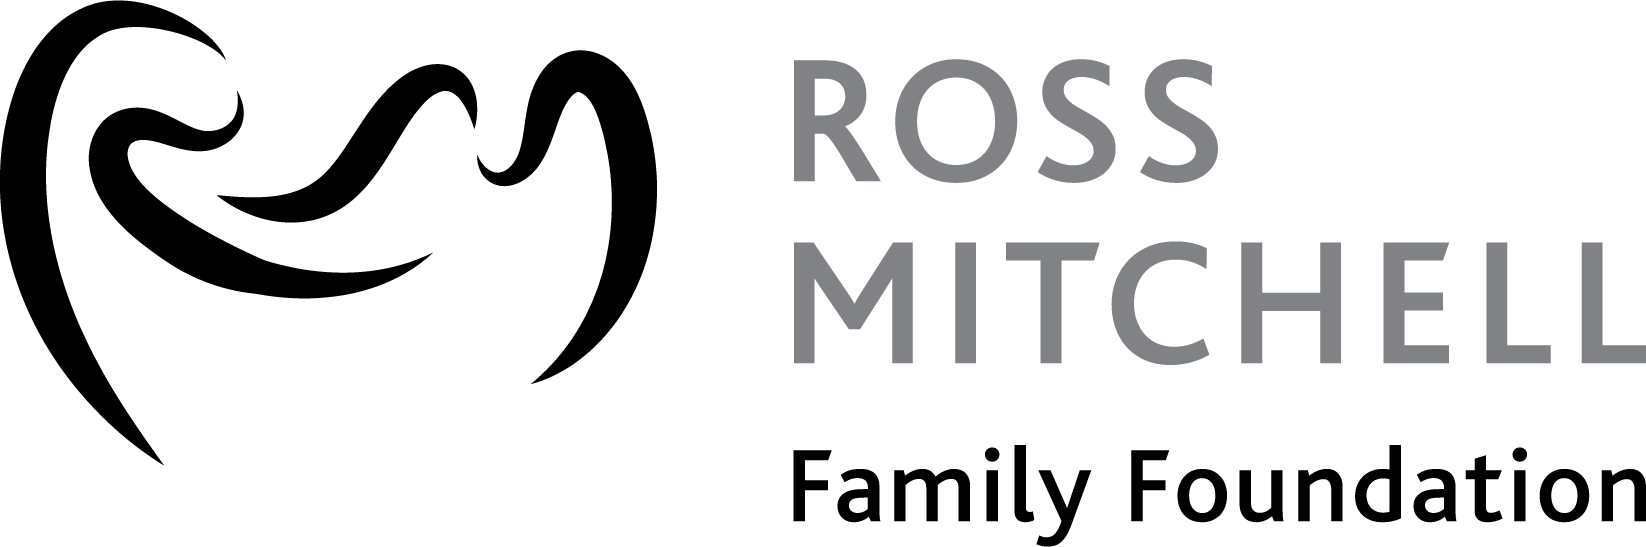 rmff-logo-full-color-rgb